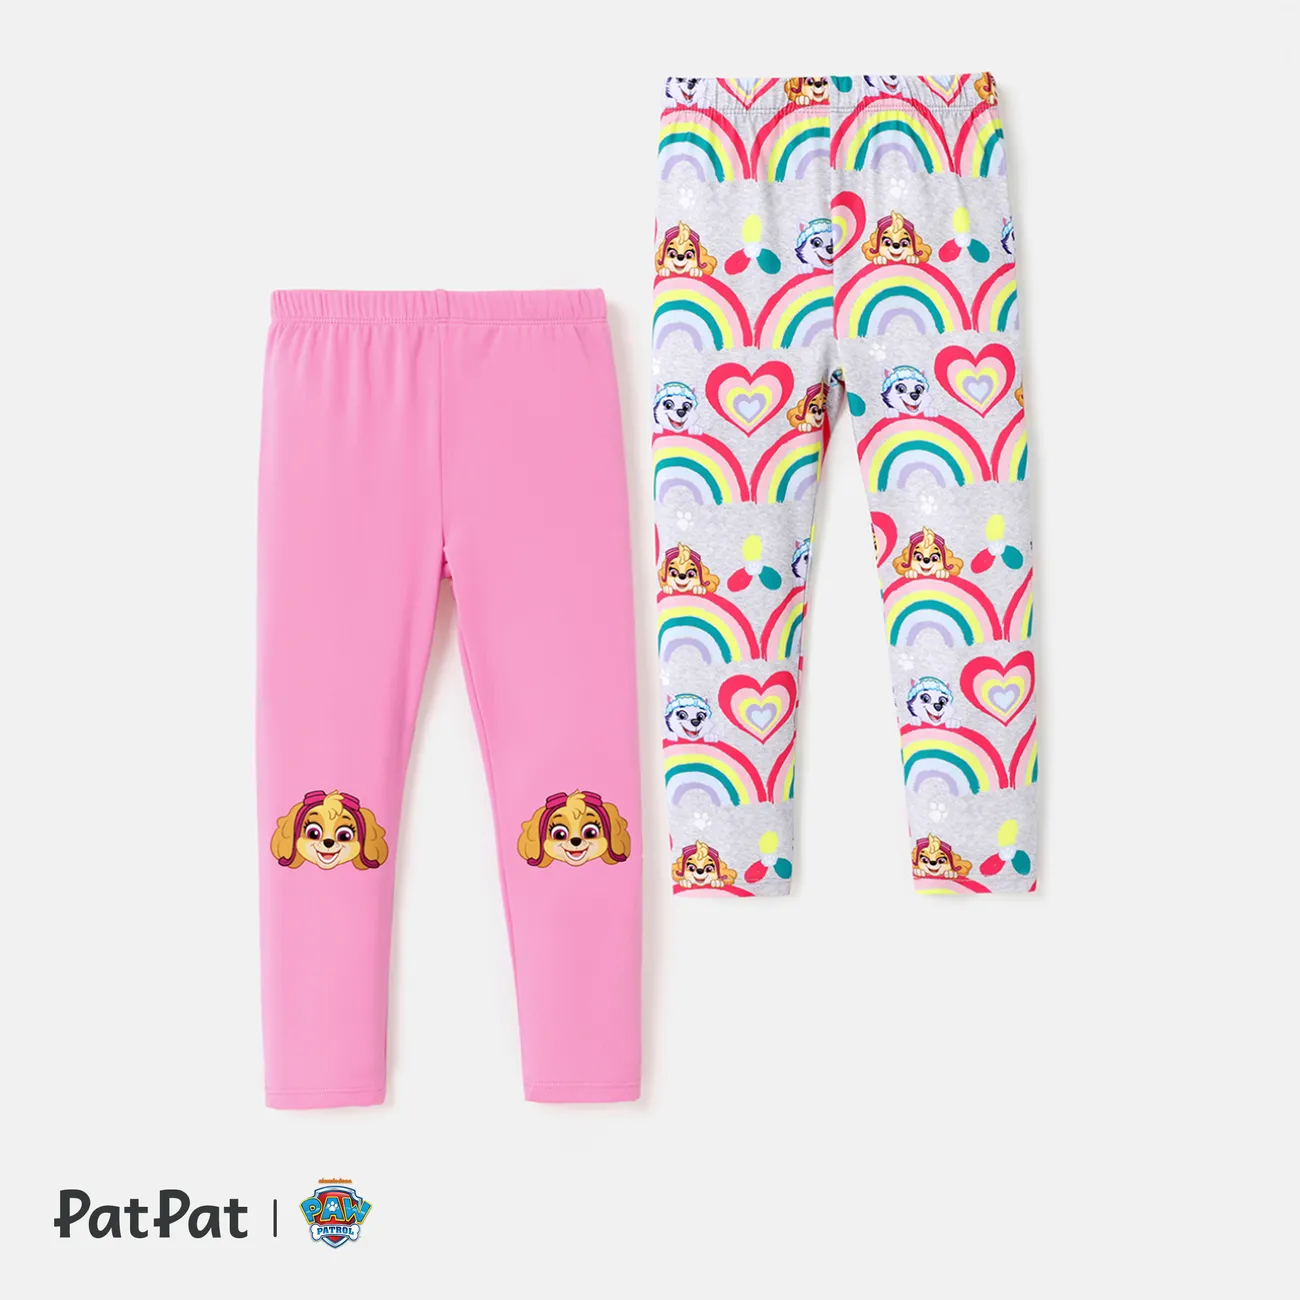 PAW Patrol Toddler Girl Character Rainbow Print Leggings  Pink big image 1